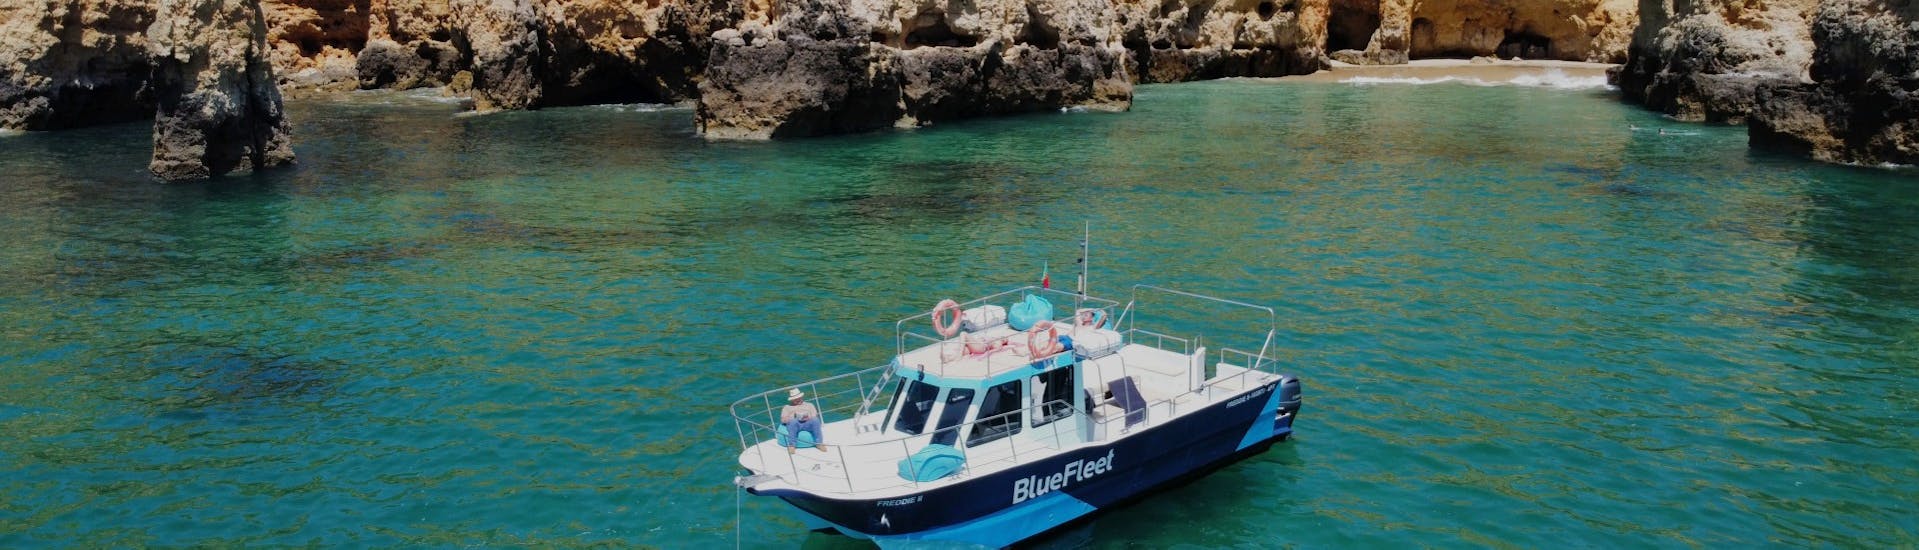 Balade en catamaran Lagos - Ponta da Piedade avec Visites touristiques.